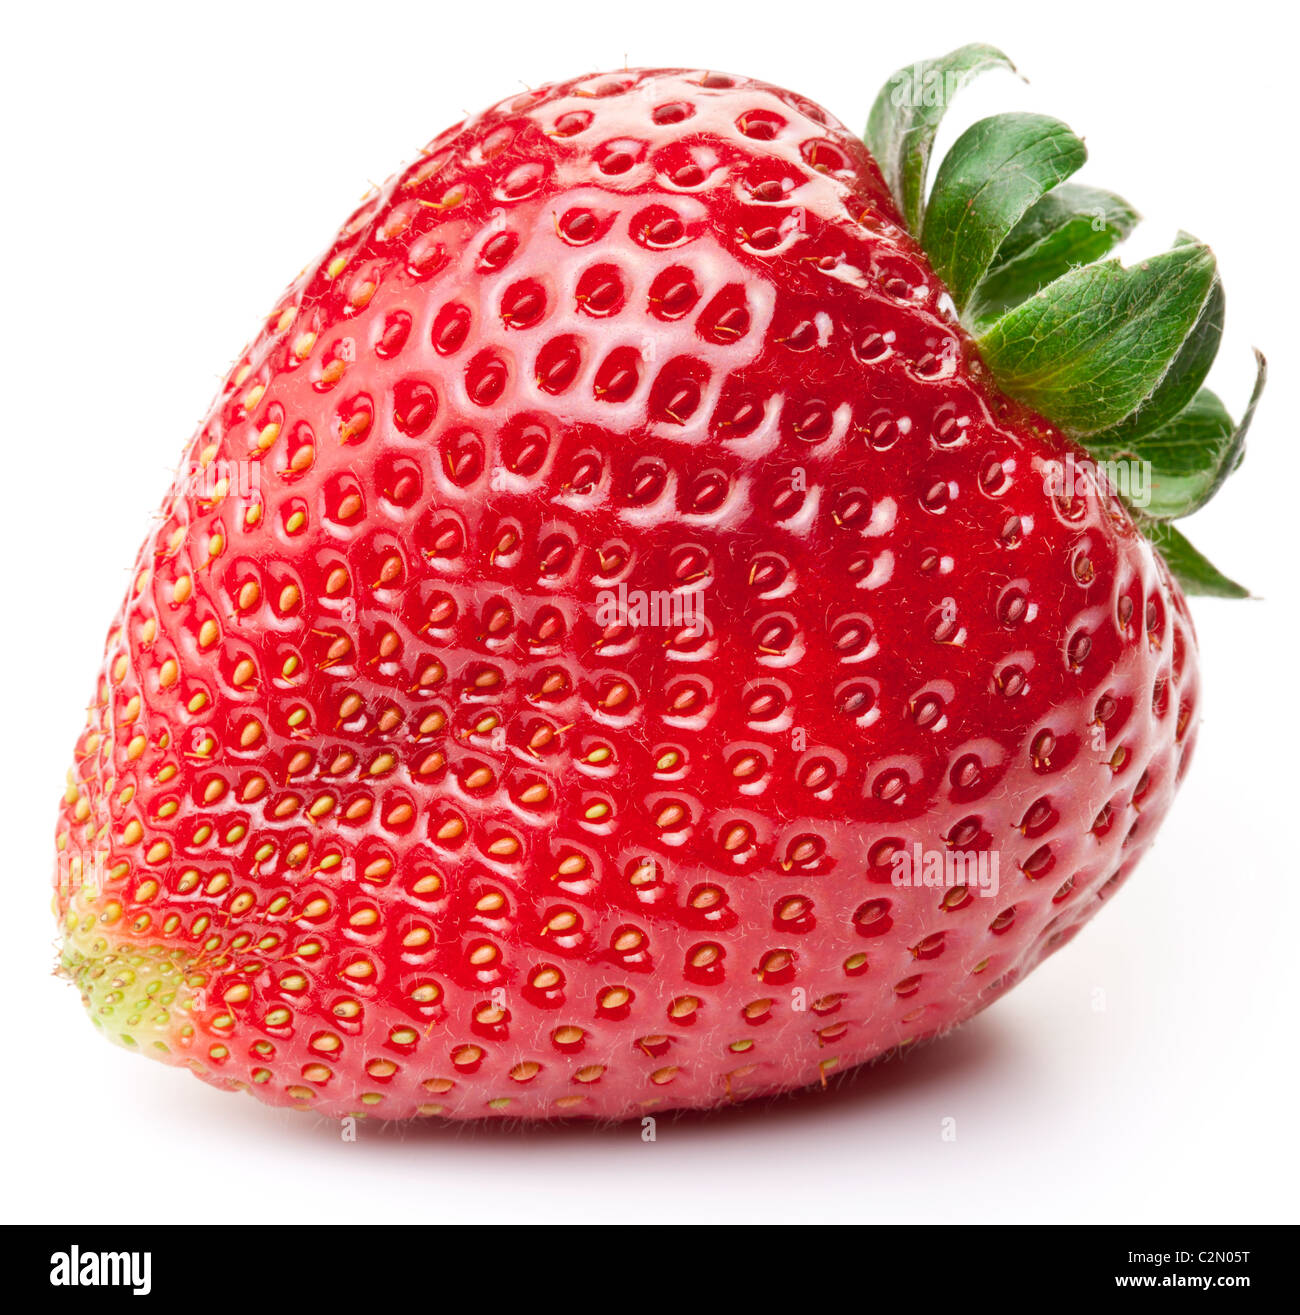 Appetizing strawberry. Isolated on a white background. Stock Photo